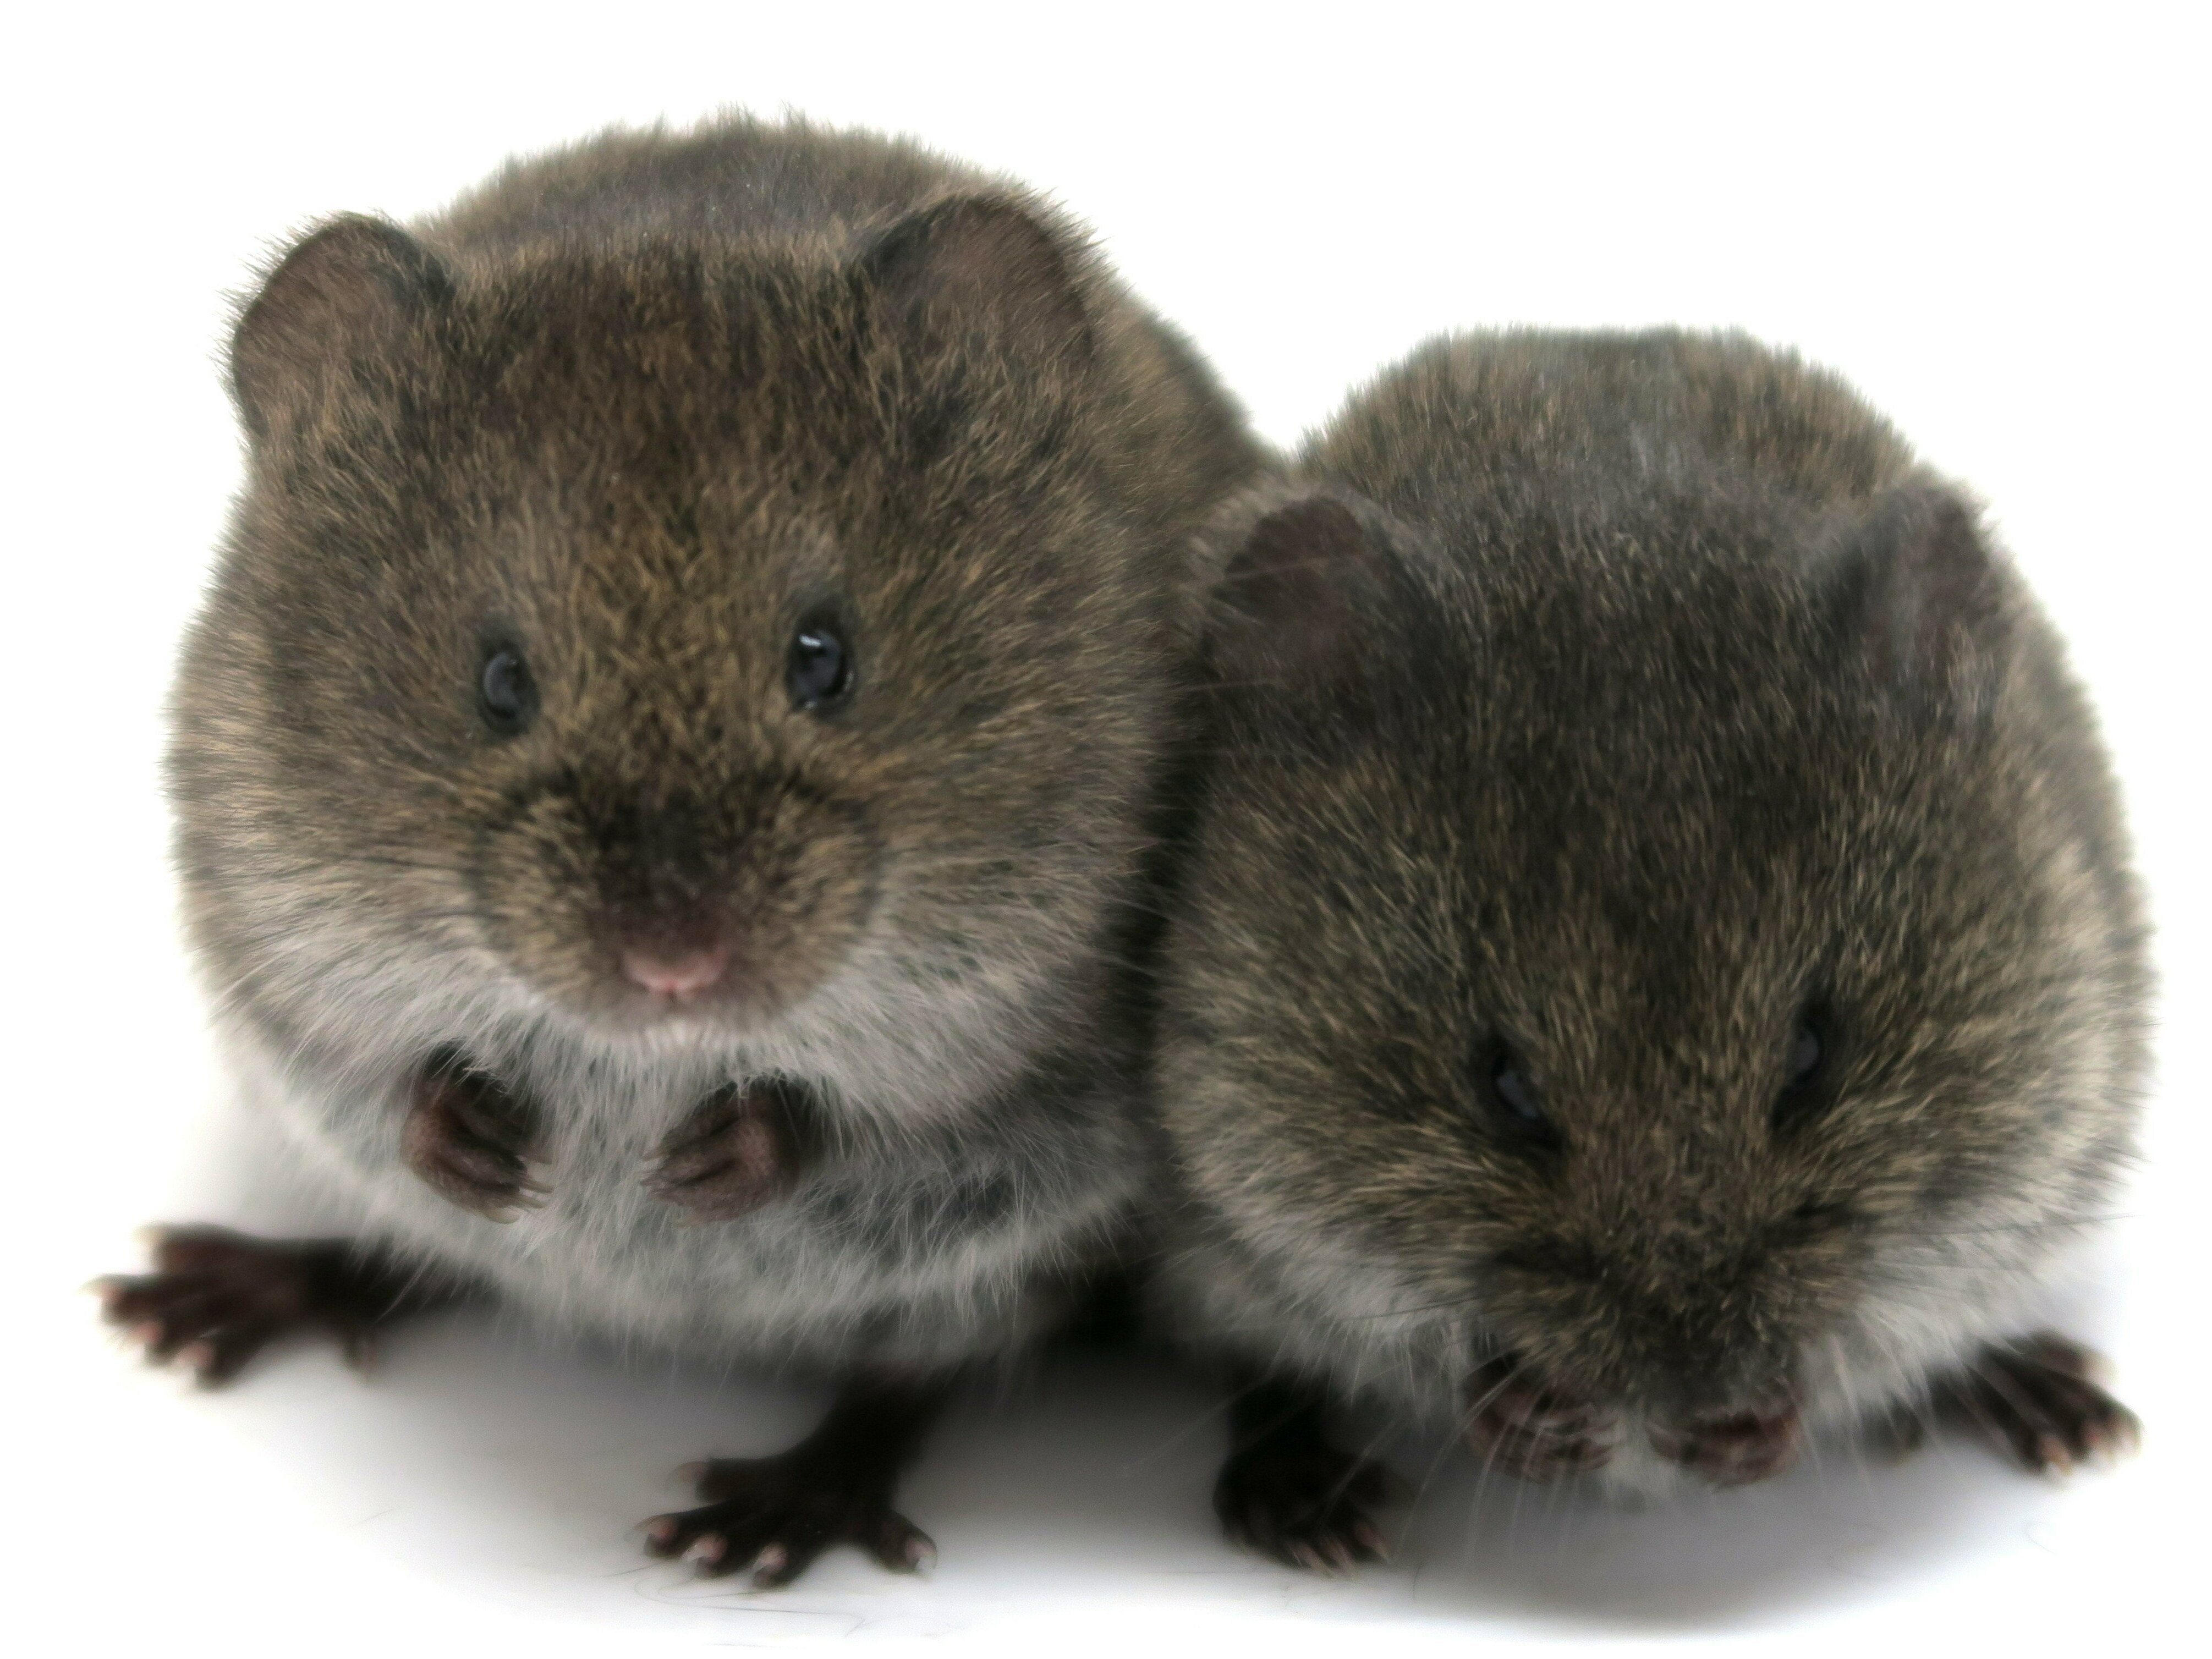 Prairie voles don't need 'love hormone' oxytocin to bond, study finds :  Shots - Health News : NPR